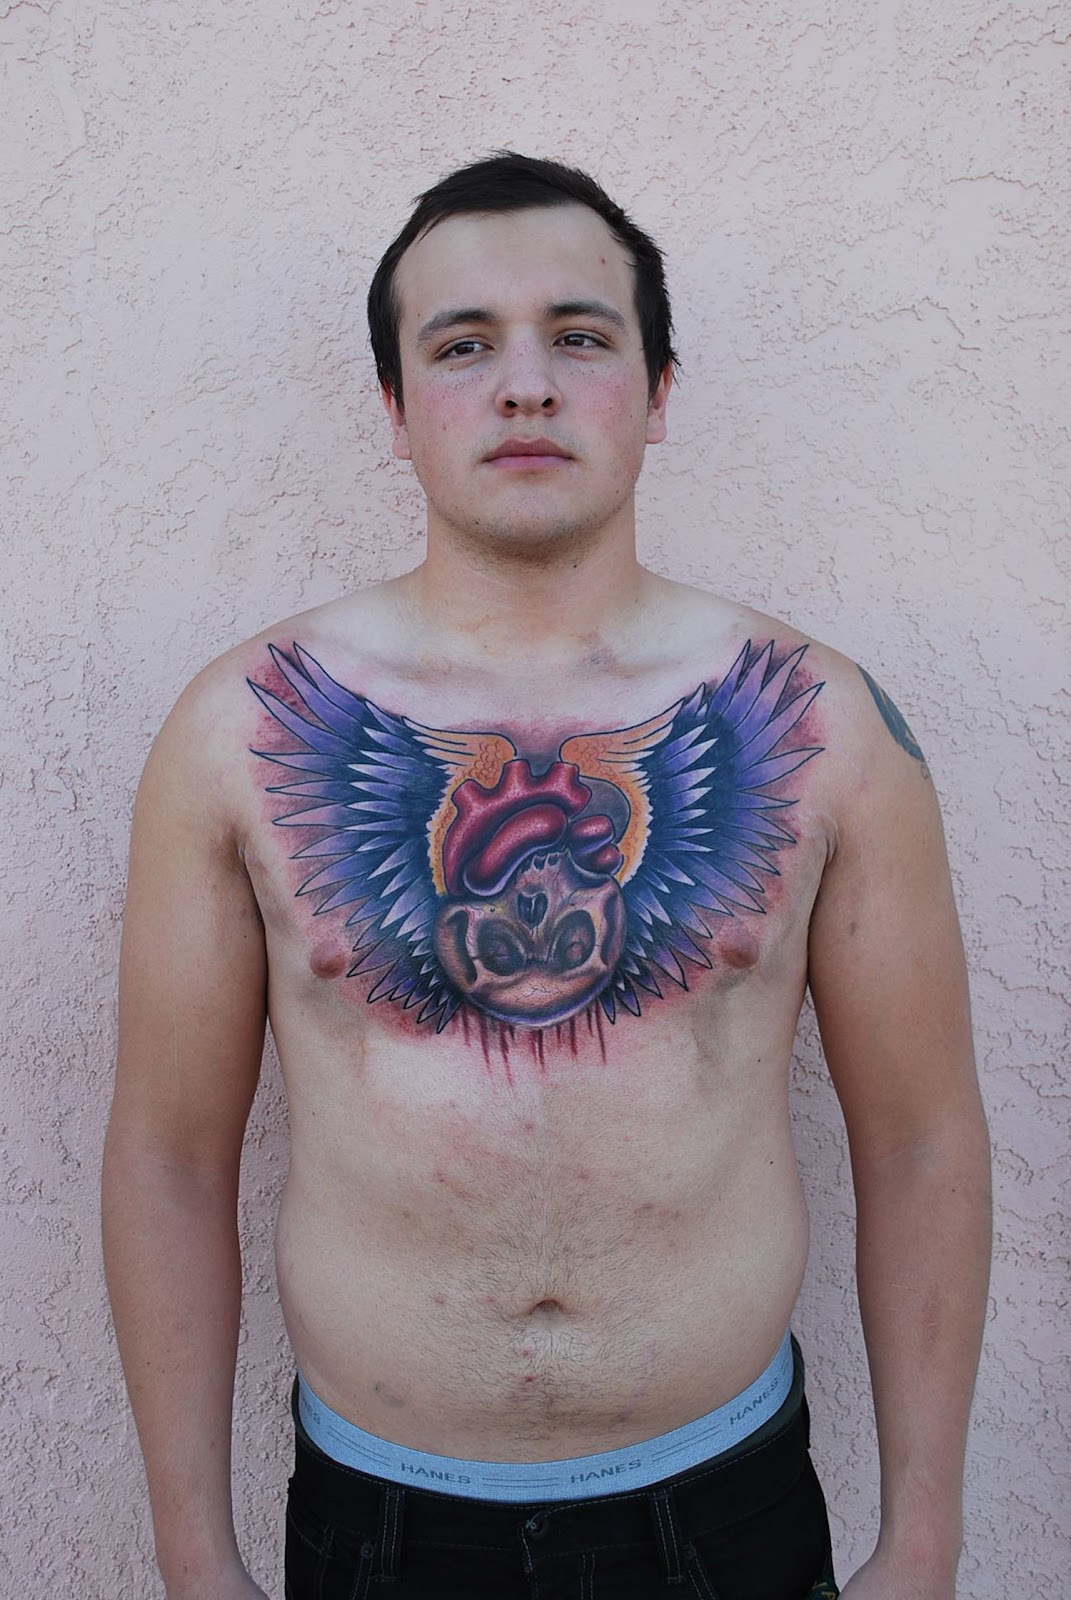 https://blogger.googleusercontent.com/img/b/R29vZ2xl/AVvXsEi2bMOG0K4gbZBsMLeSgiA2vuxw760wePu05VYxfSb36yxMqJGStQXc1xAkKc2neENYLOwX7xWwEuzwWdBODM3JLKAvwo9wcCl_7Auhxfmd1e6FoDqXX2xenR4hwftCqMAMnZ570f8dLfic/s1600/Frontview+Freehand+Skull+Anatomical+Heart+and+Wings+Chest+Tattoo.jpg